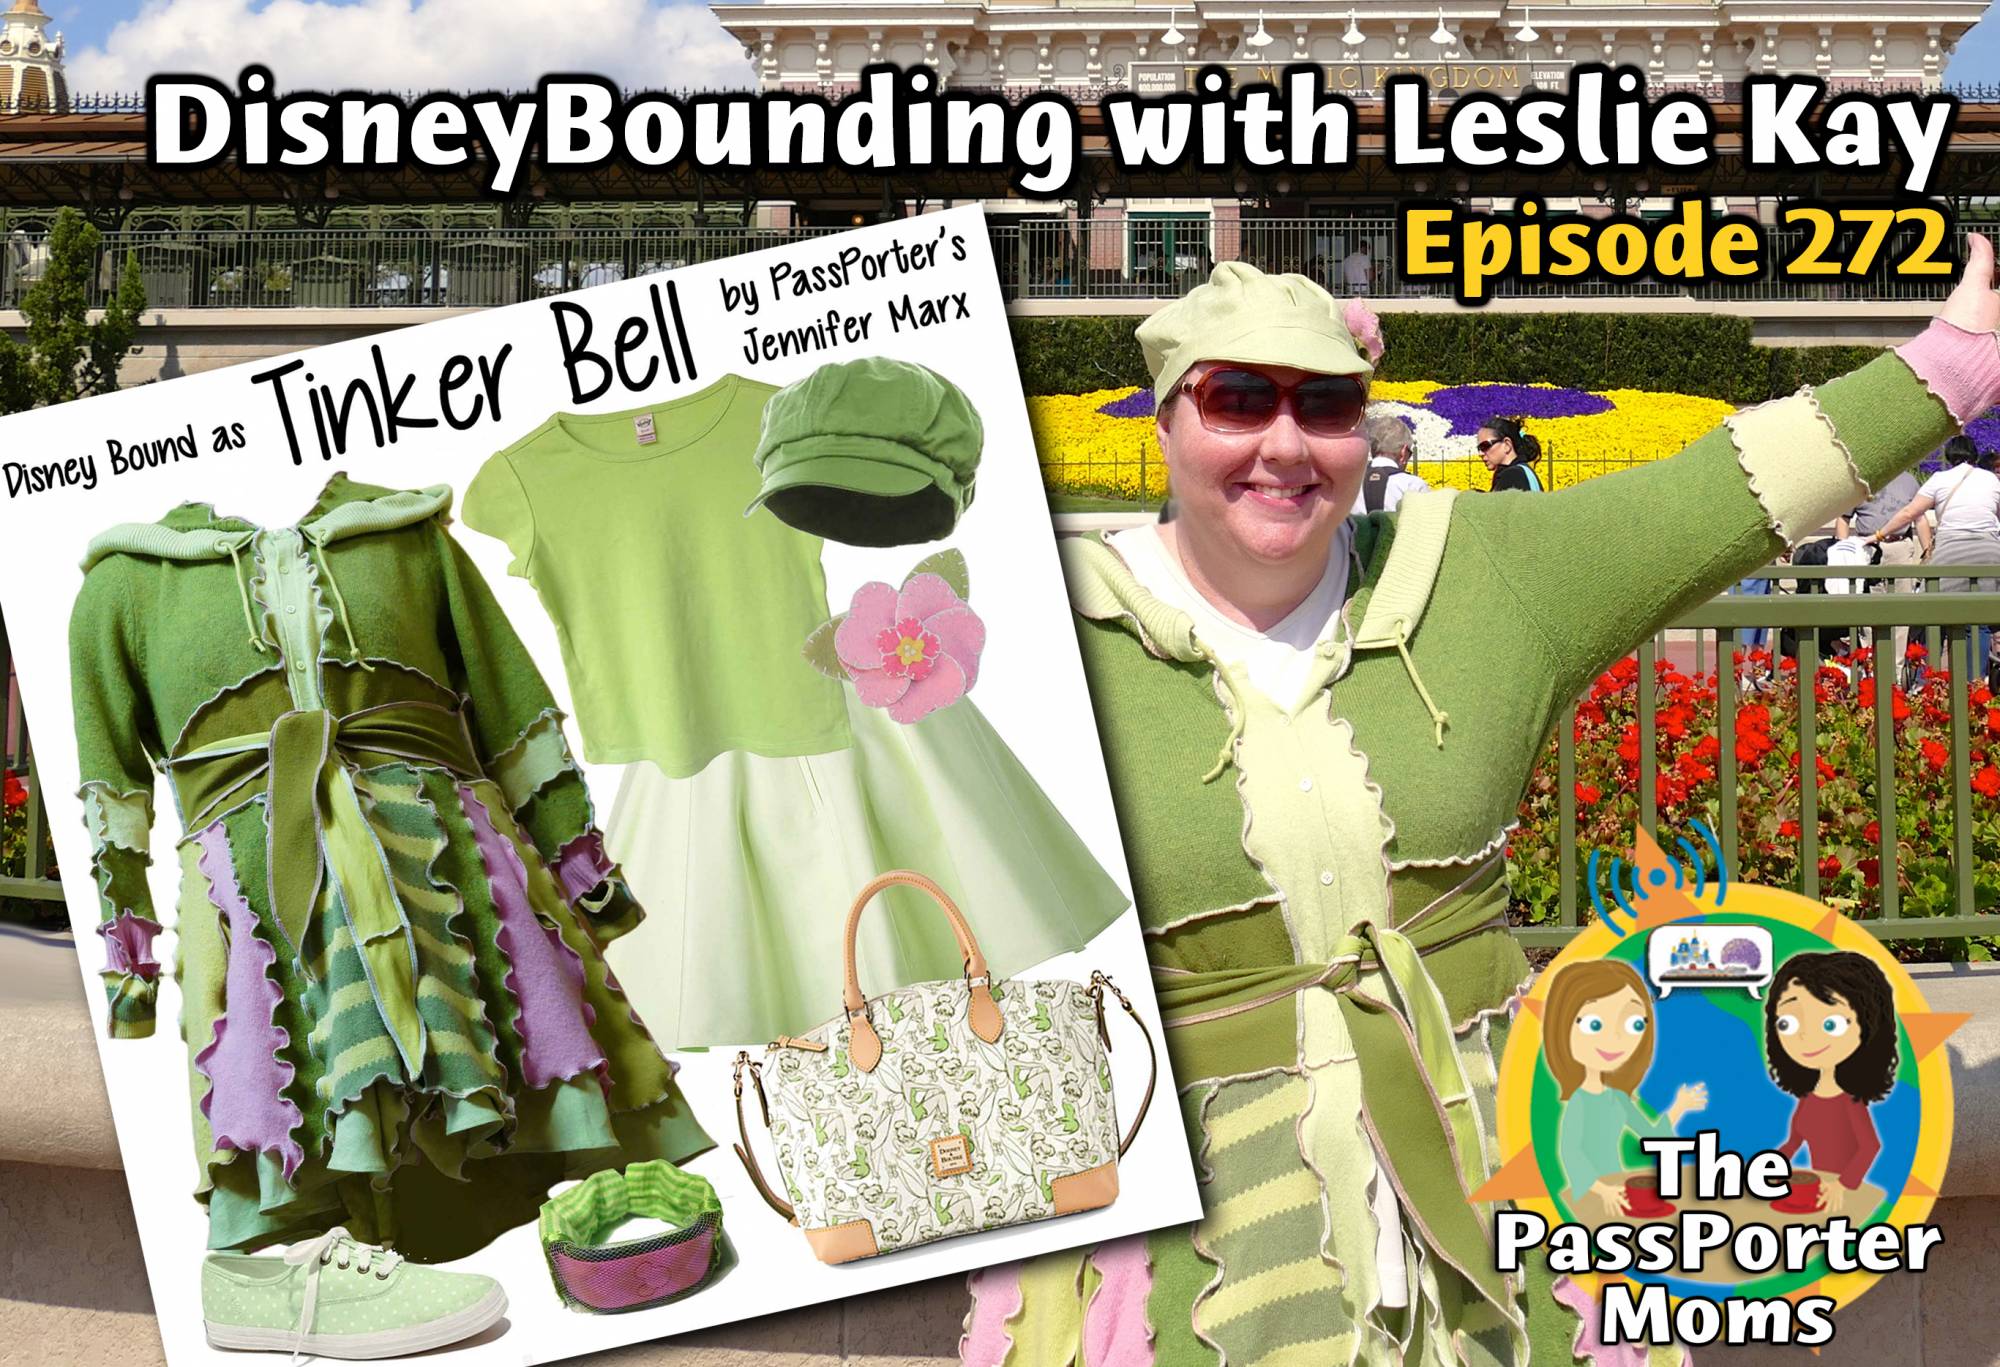 DisneyBounding with Leslie Kay